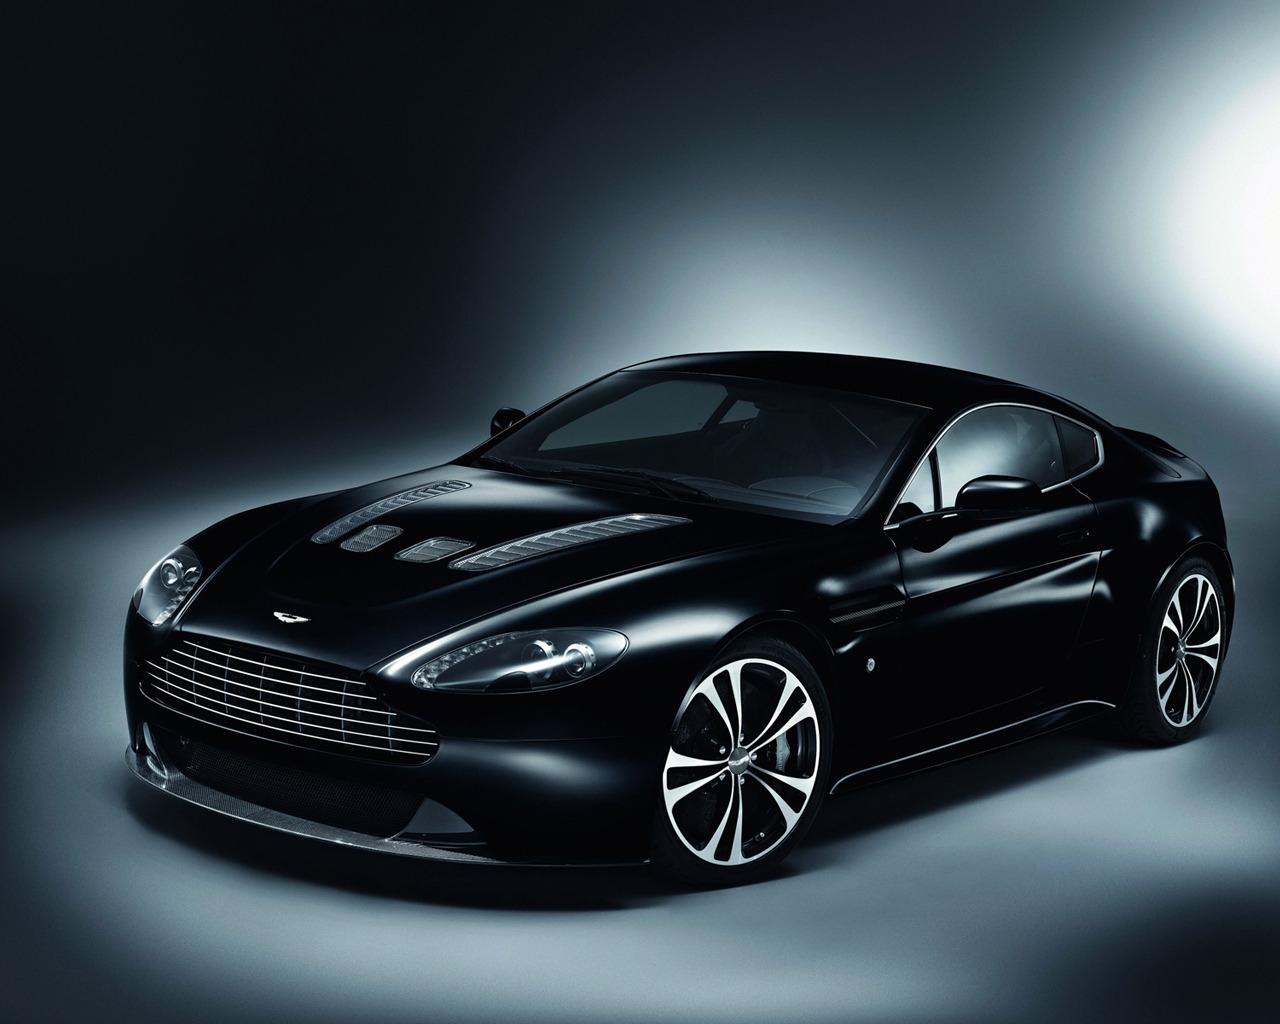 Aston Martin V12 Vantage Carbon Black for 1280 x 1024 resolution